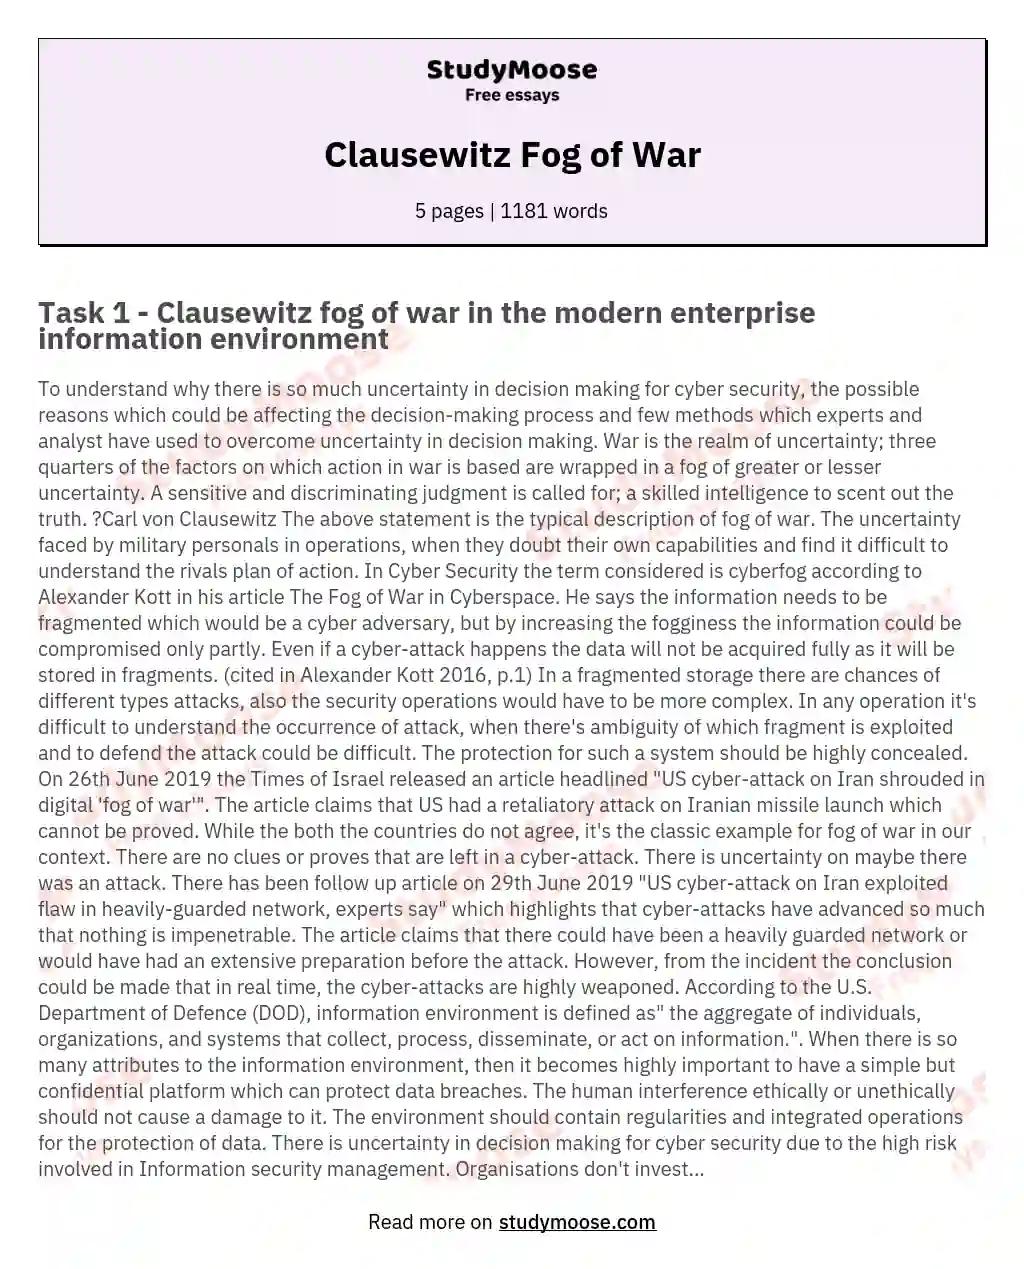 Clausewitz Fog of War essay